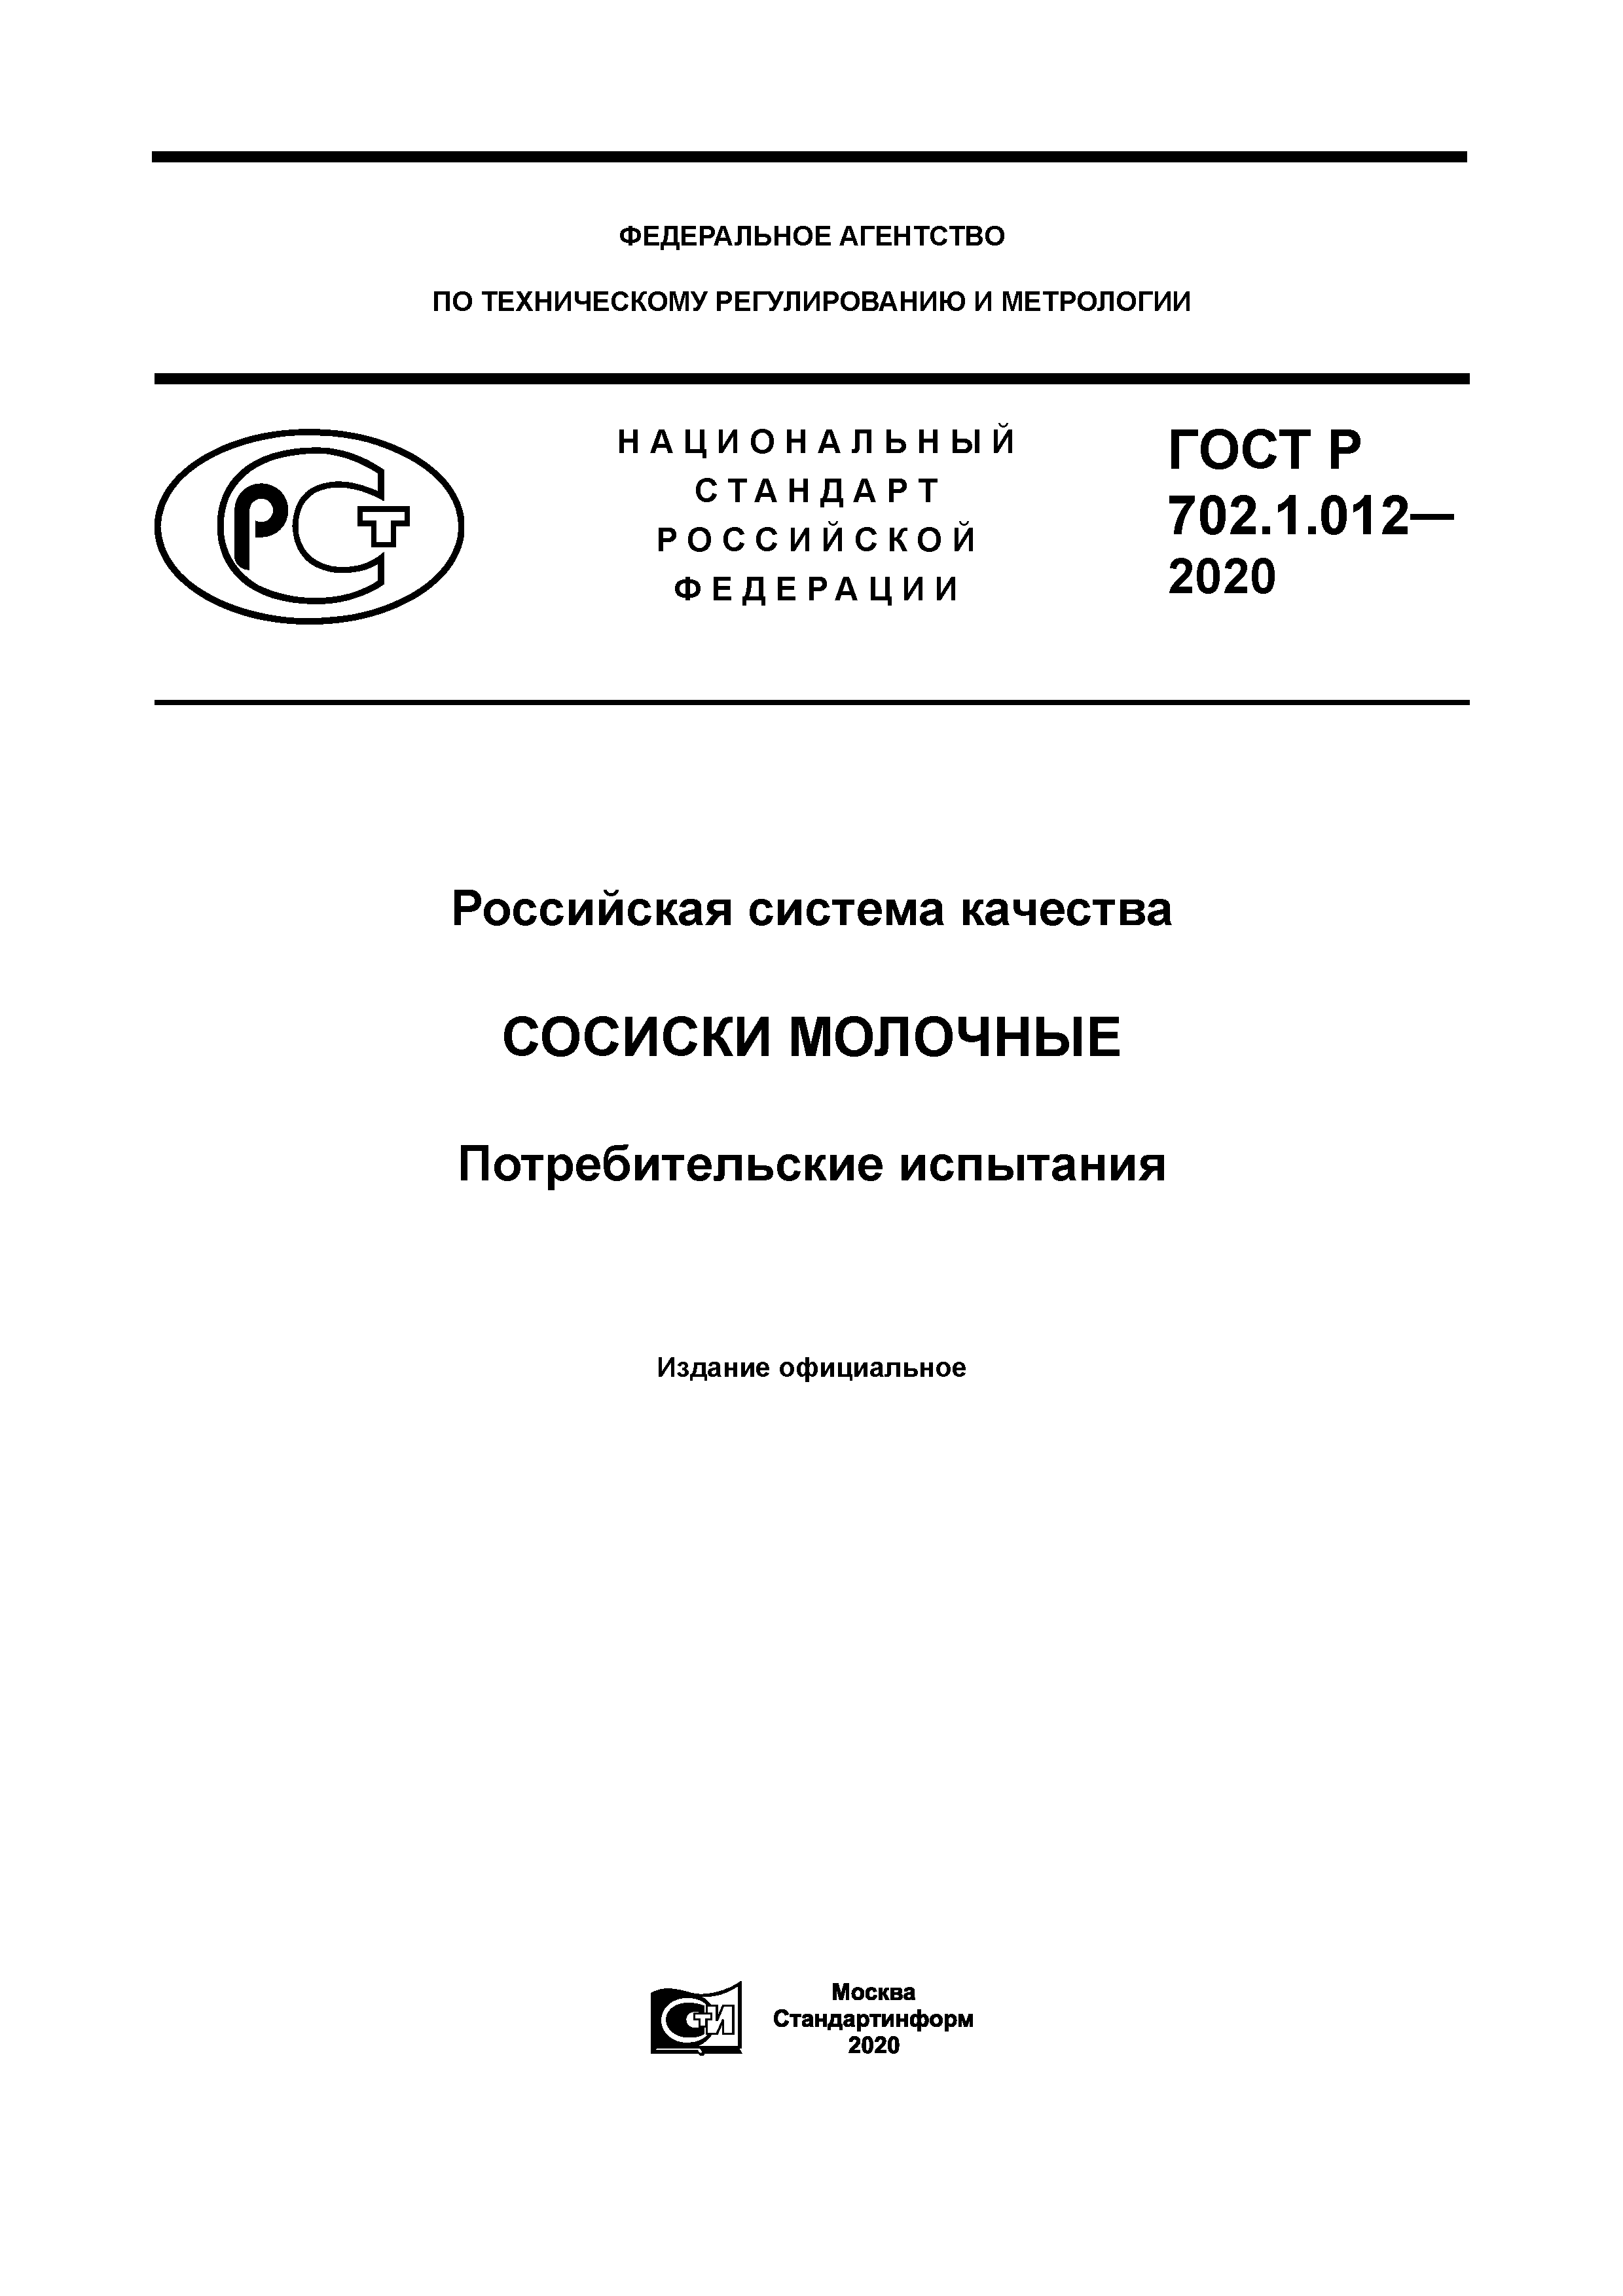 ГОСТ Р 702.1.012-2020